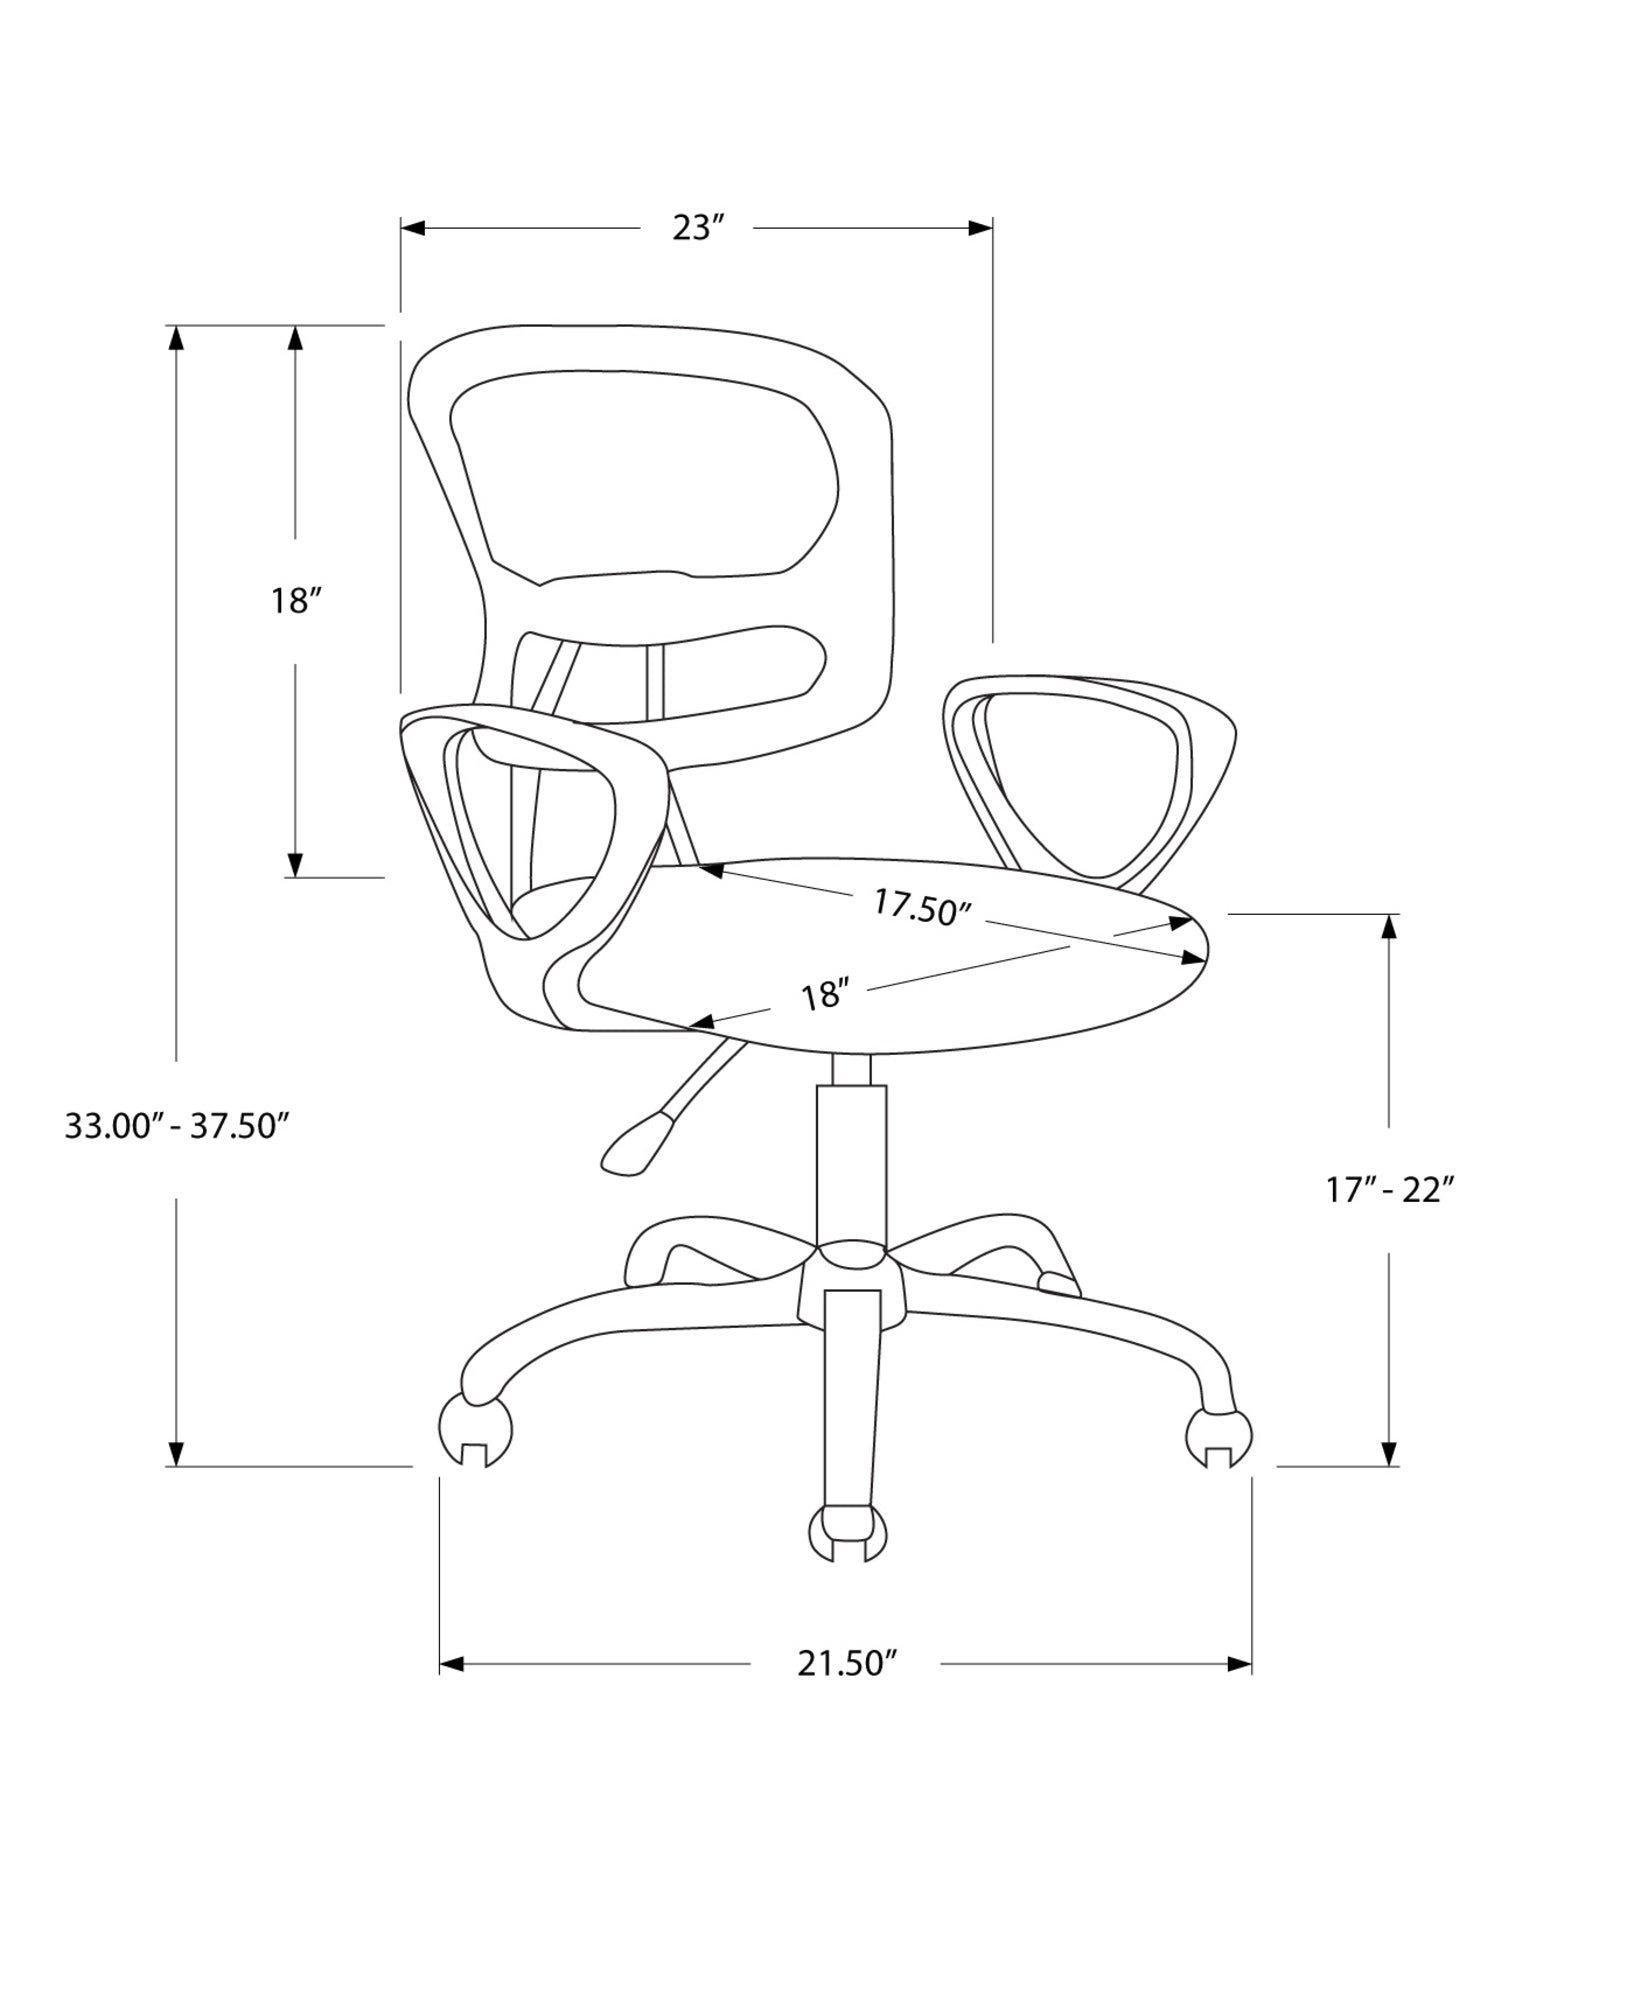 MN-747260    Office Chair, Adjustable Height, Swivel, Ergonomic, Armrests, Computer Desk, Office, Metal Base, Mesh, Black, Contemporary, Modern